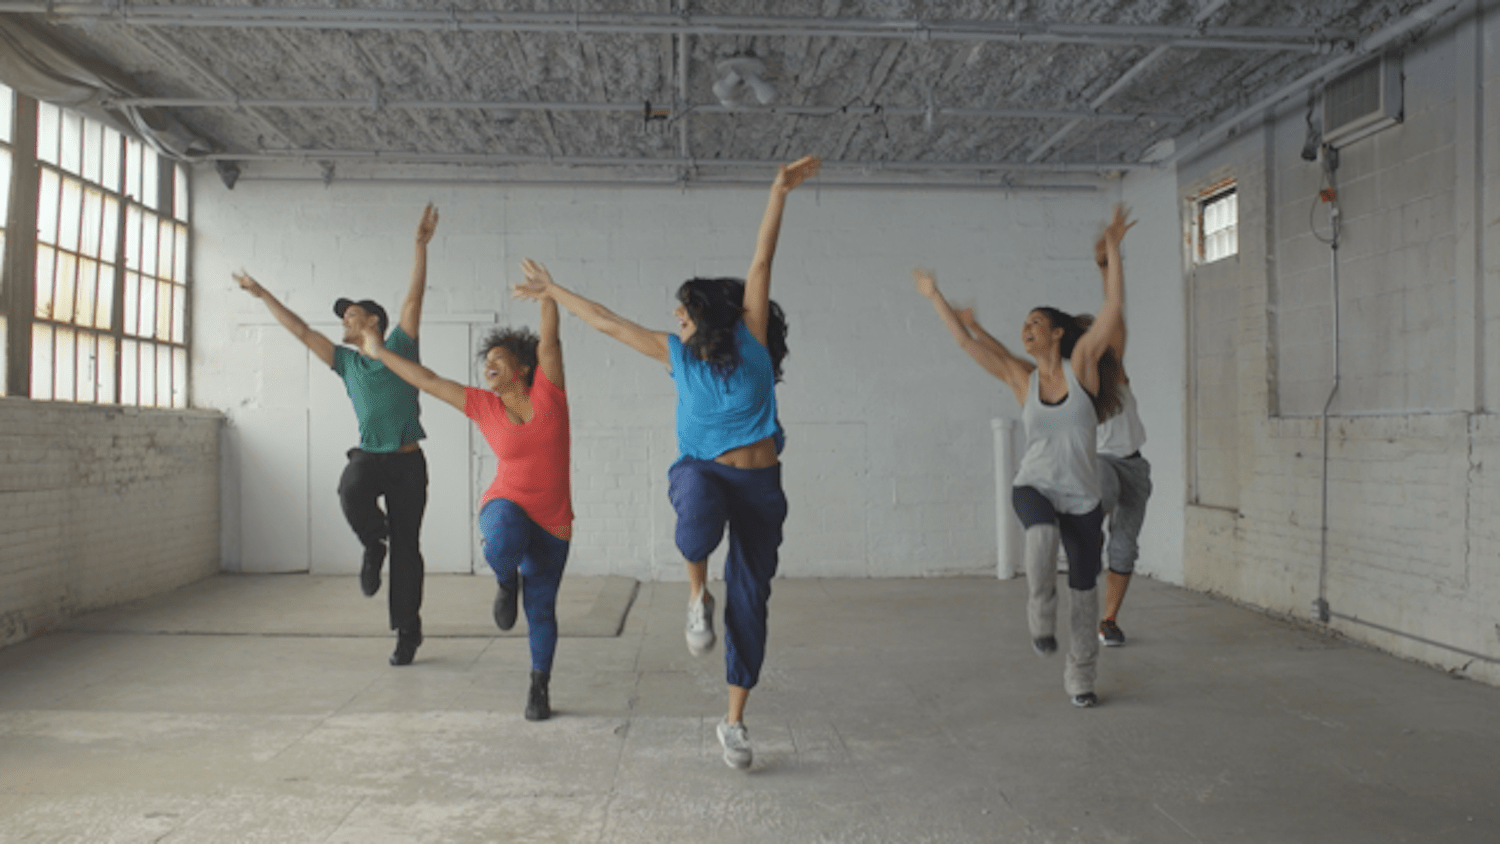 Garjana,一个新的健康概念为食品罐,筹集资金是汇集了数百名纽约人一小时完全身临其境的舞蹈锻炼经w88优德老虎机平台验。